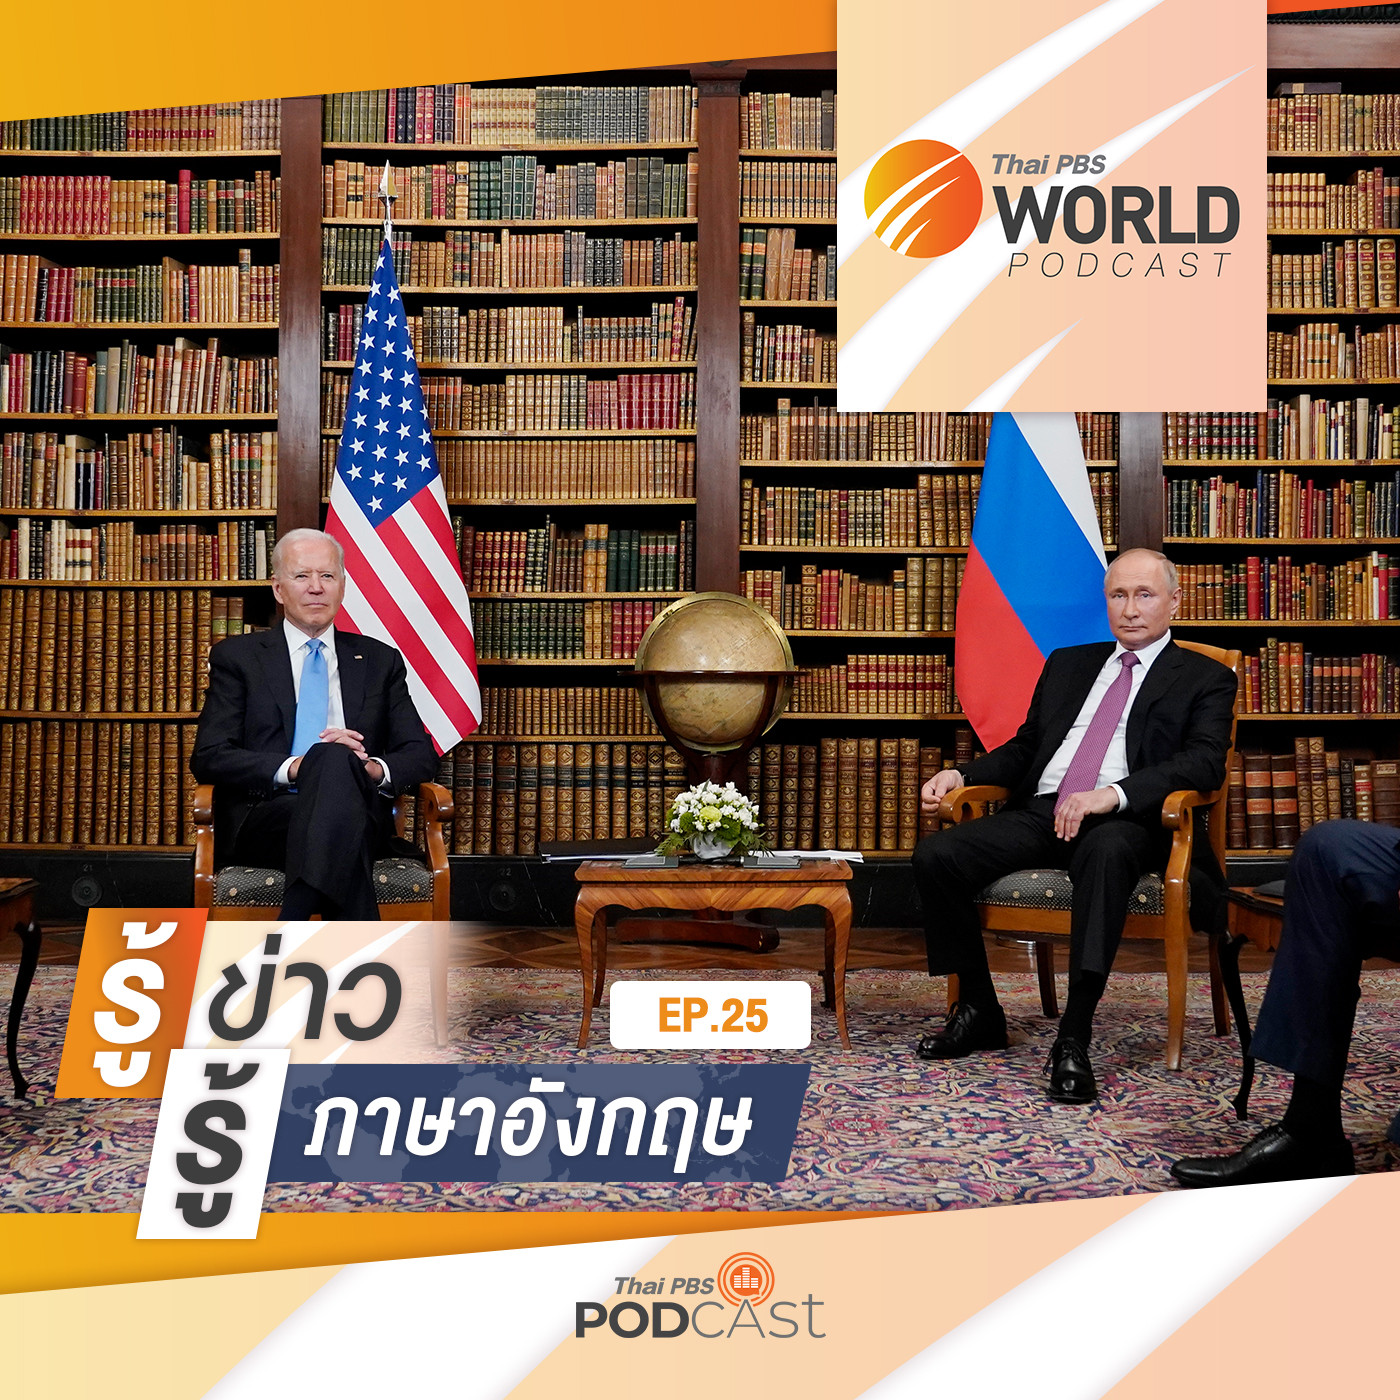 Thai PBS World Podcast - รู้ข่าว รู้ภาษาอังกฤษ EP. 25: รู้ข่าว รู้ภาษาอังกฤษ - บทสรุปประชุมส�